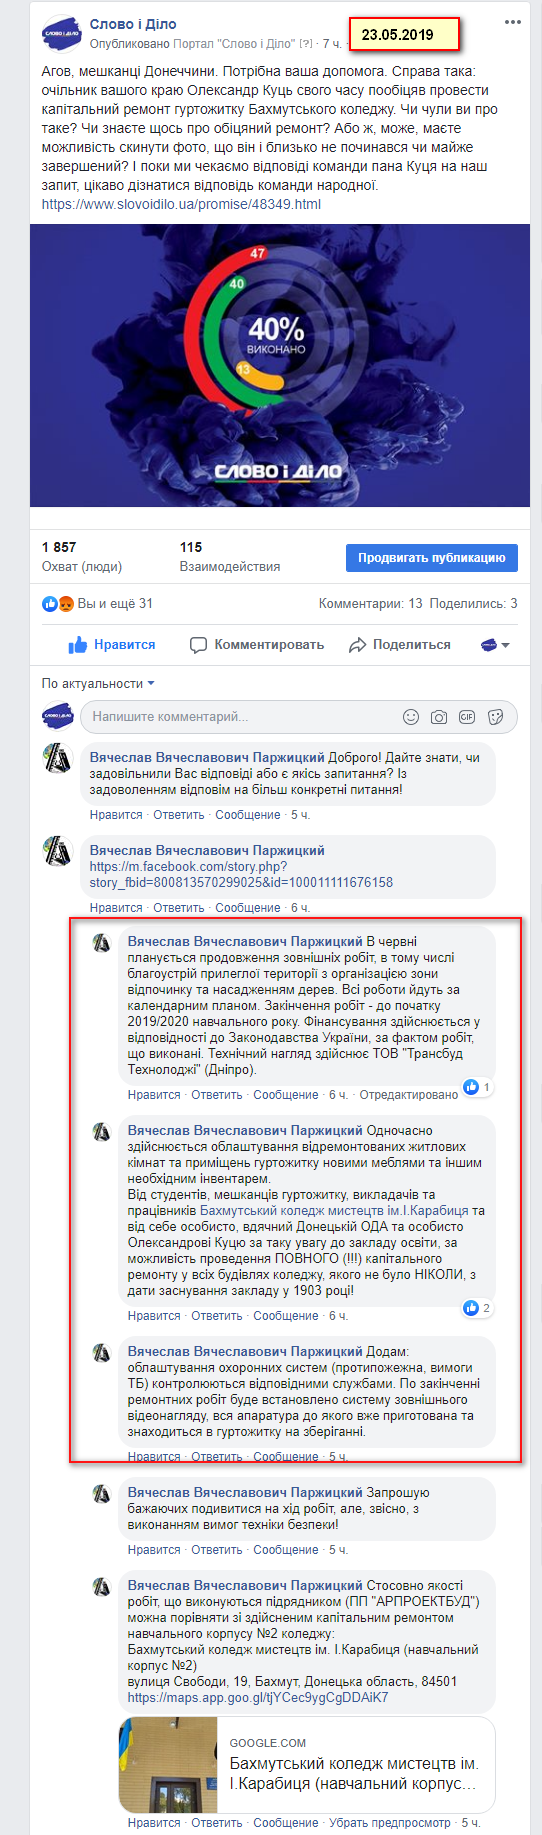 https://www.facebook.com/slovoidilo.ua/posts/2279672148751230